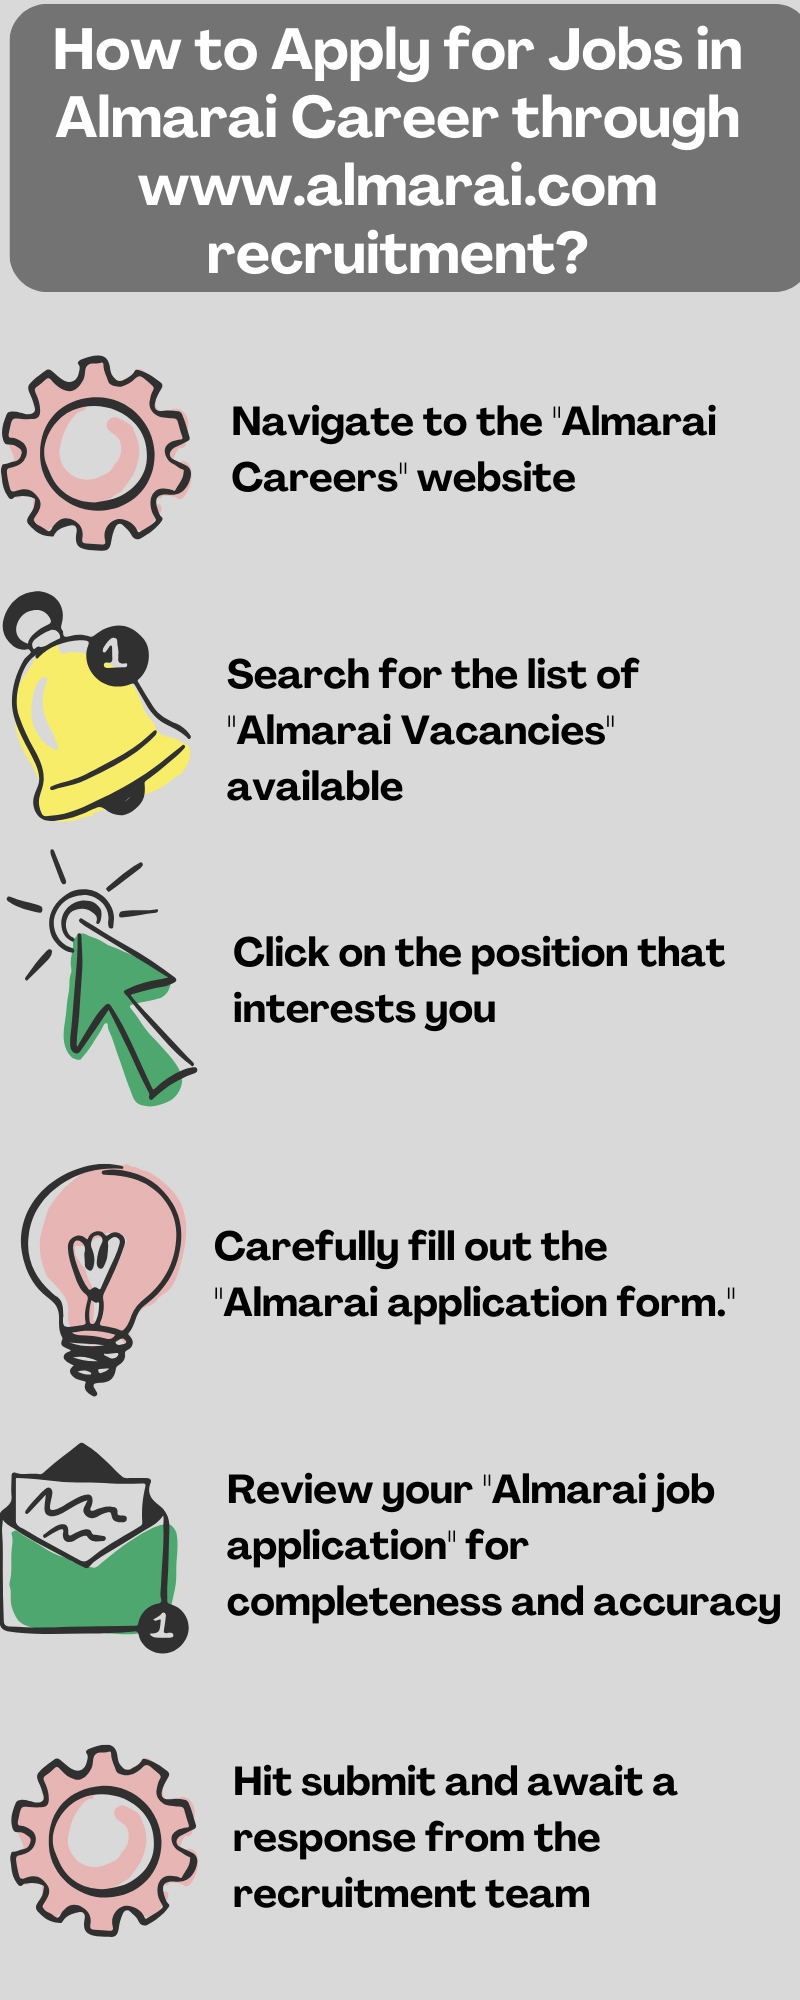 How to Apply for Jobs in Almarai Career through www.almarai.com recruitment?